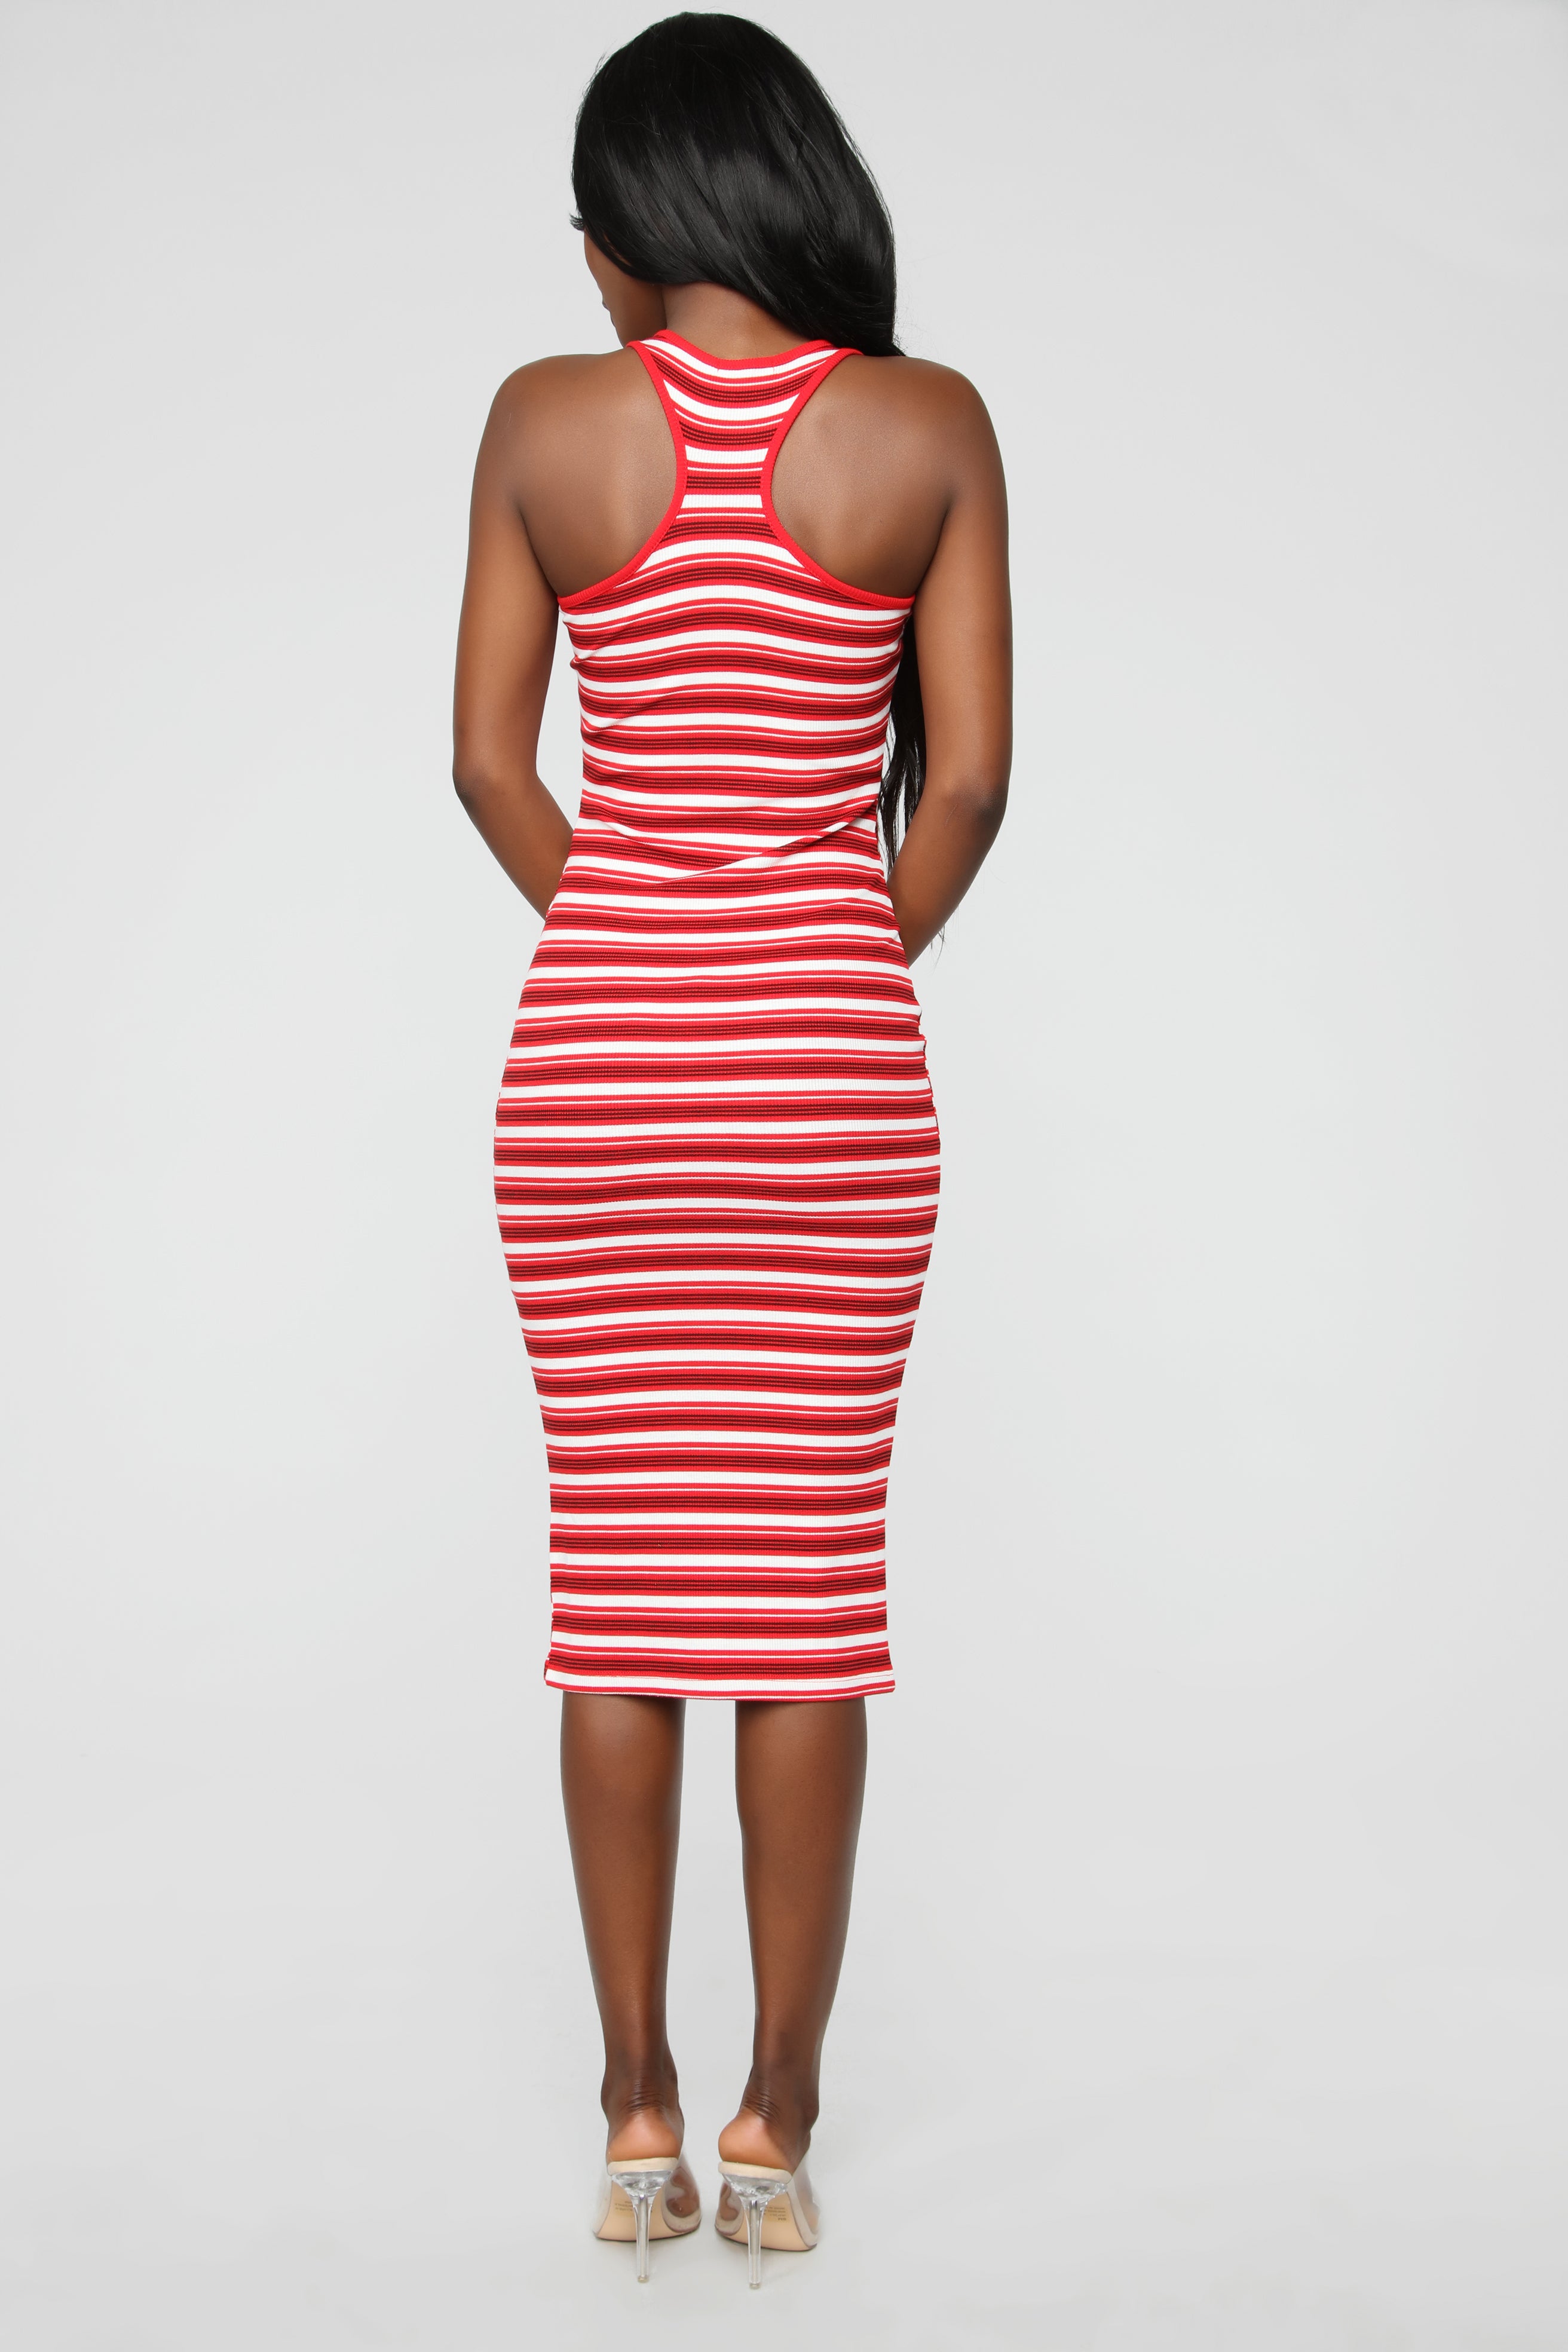 Fan Of Stripes Ribbed Dress - Red/White – Fashion Nova